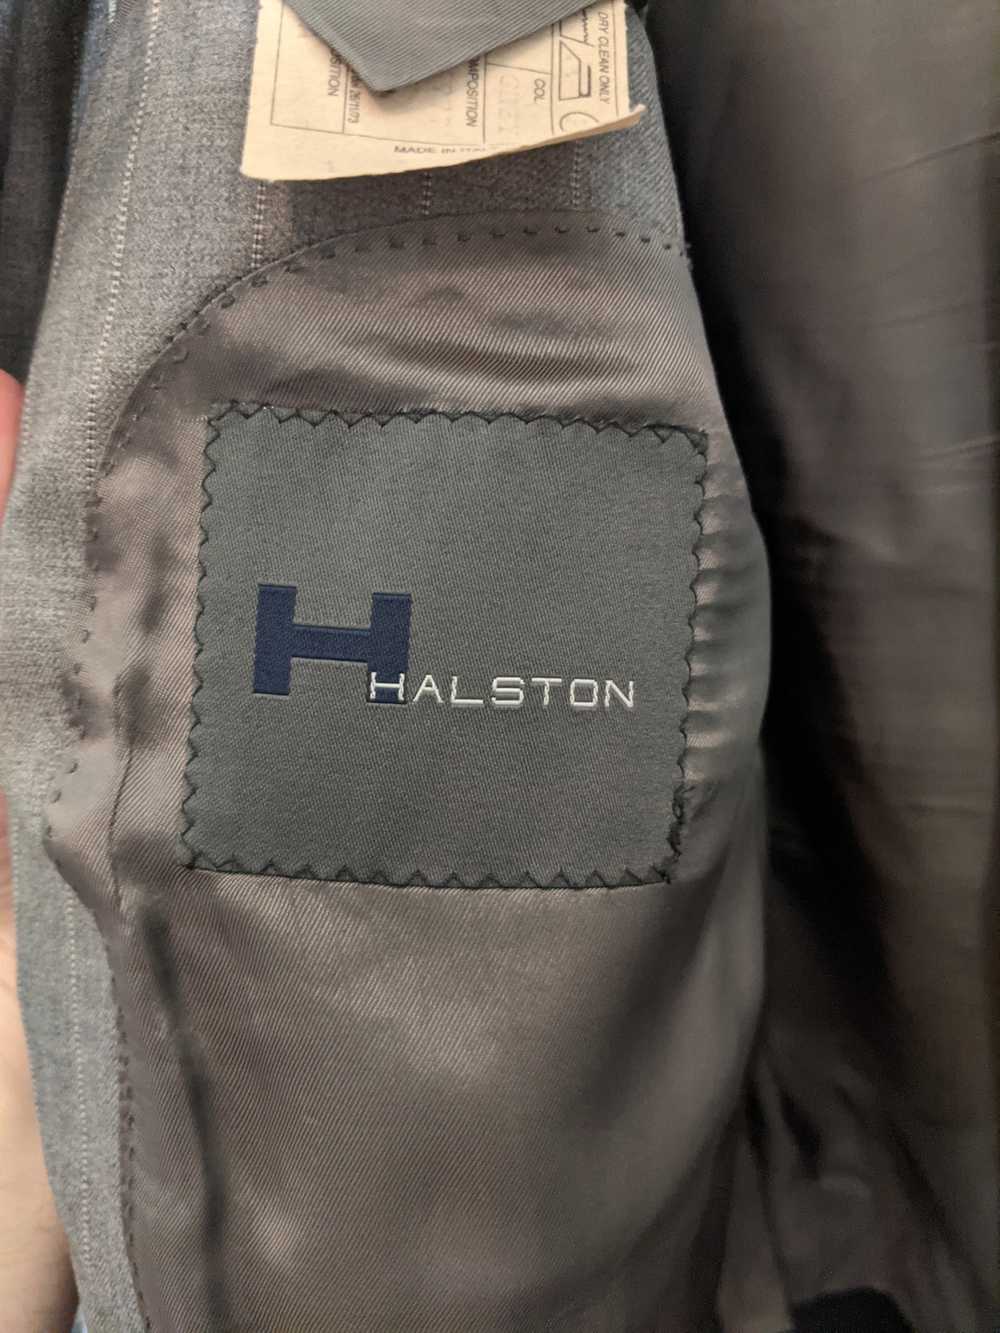 Halston Iii × Vintage Halston gray pinstriped Ita… - image 3